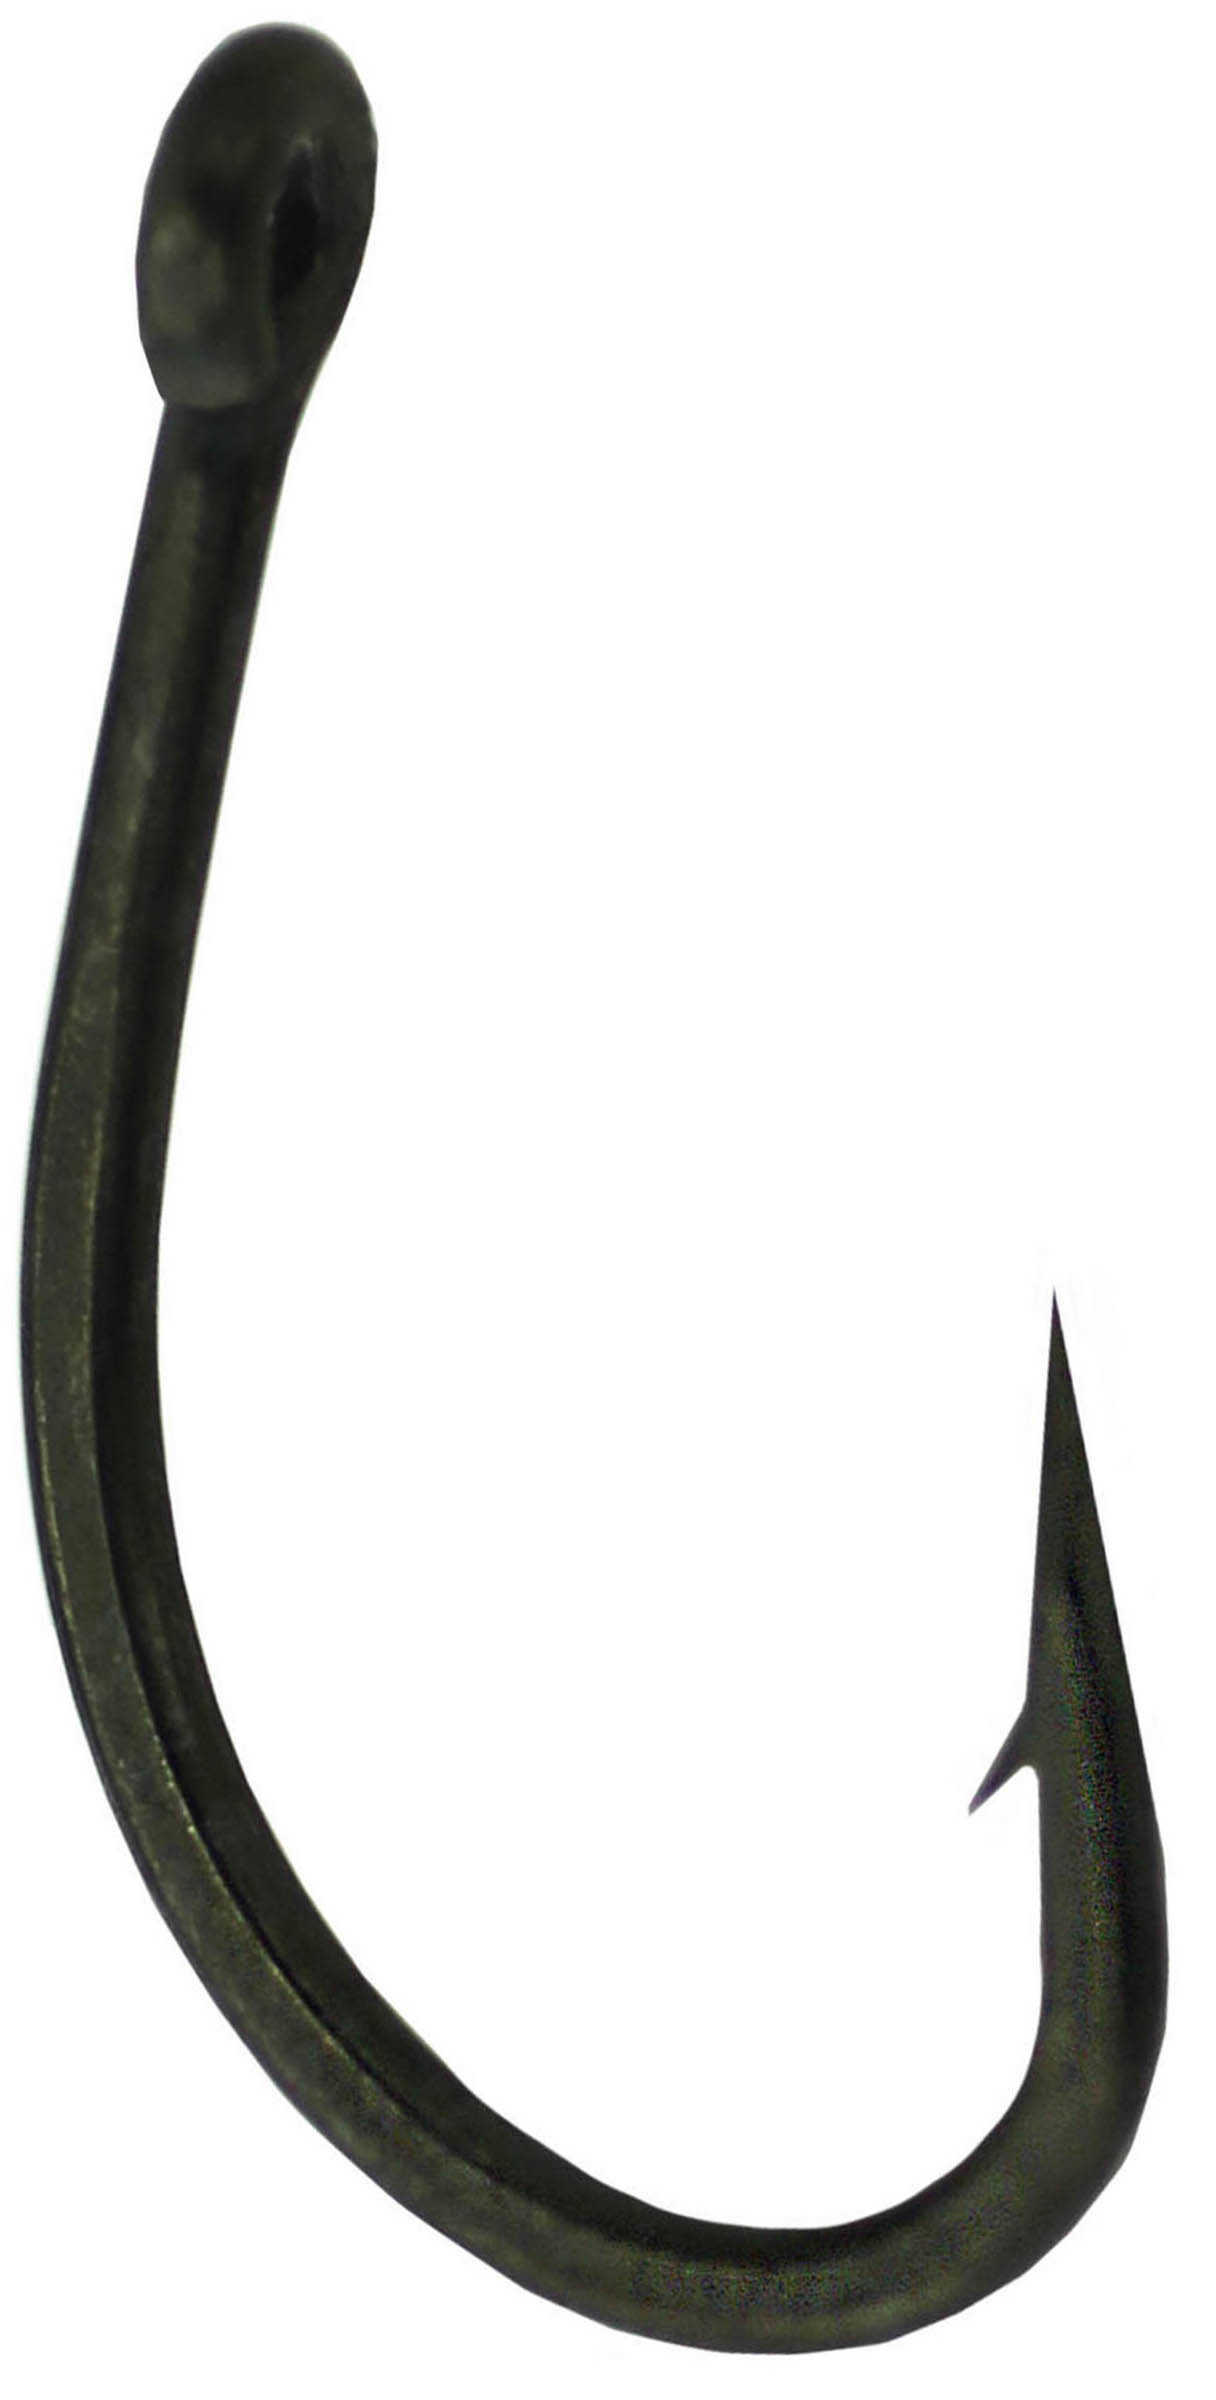 Gamakatsu G-Carp Super Hook Size 1, Bronze, Pack Of 10 Md: 351210